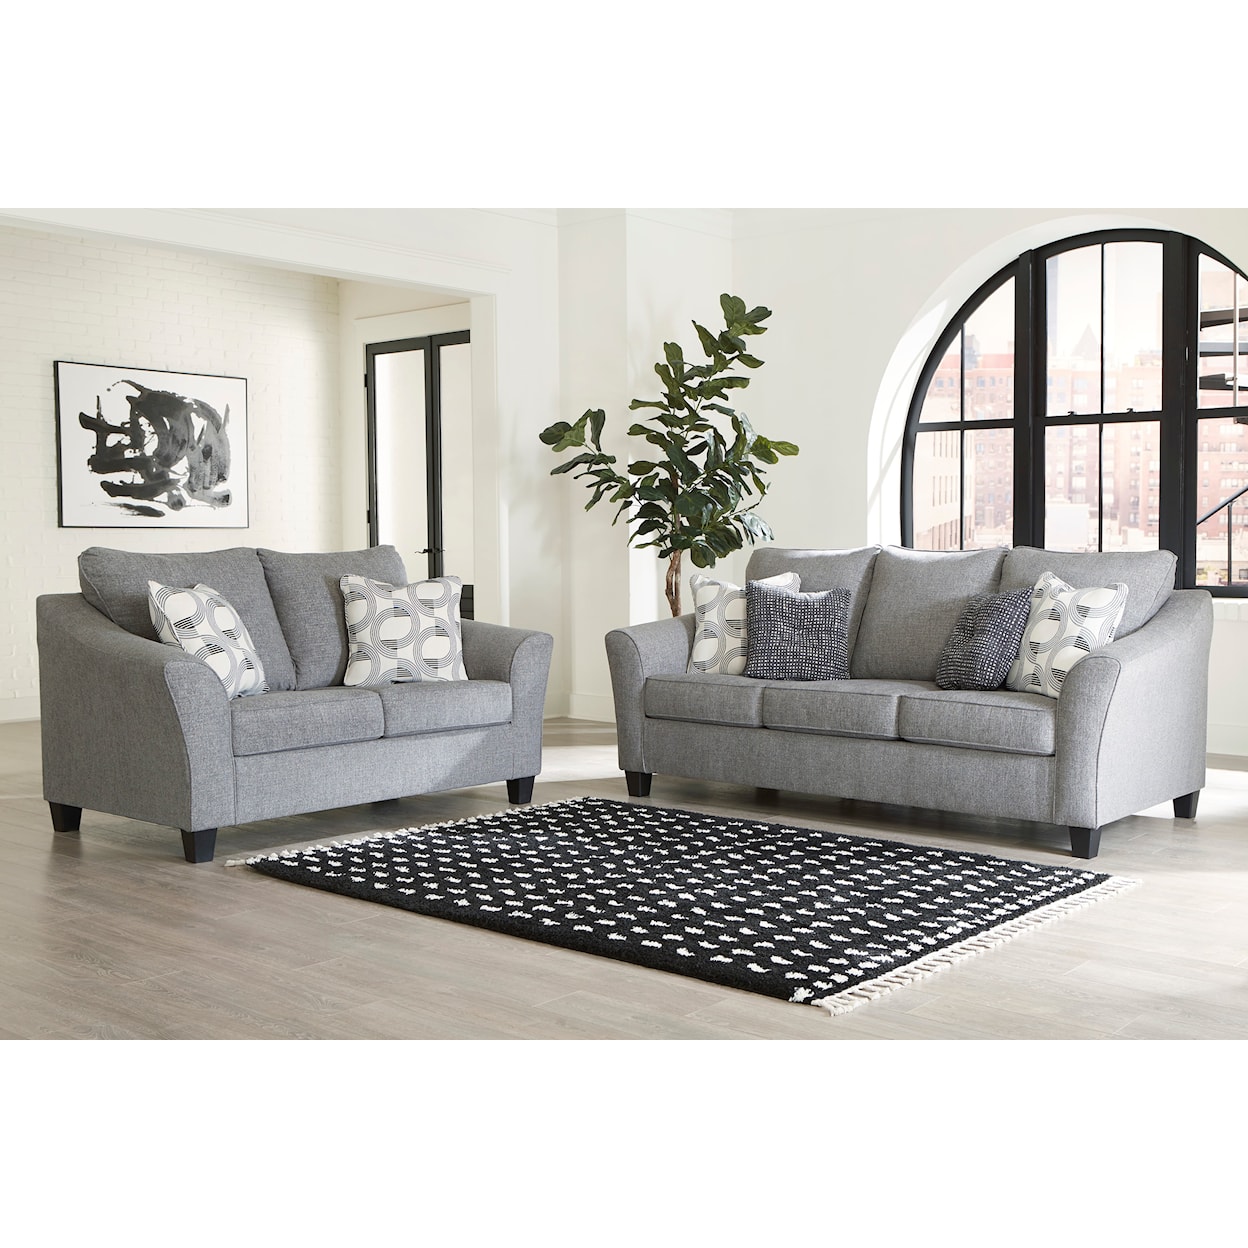 Ashley Furniture Benchcraft Mathonia 2-Piece Living Room Set